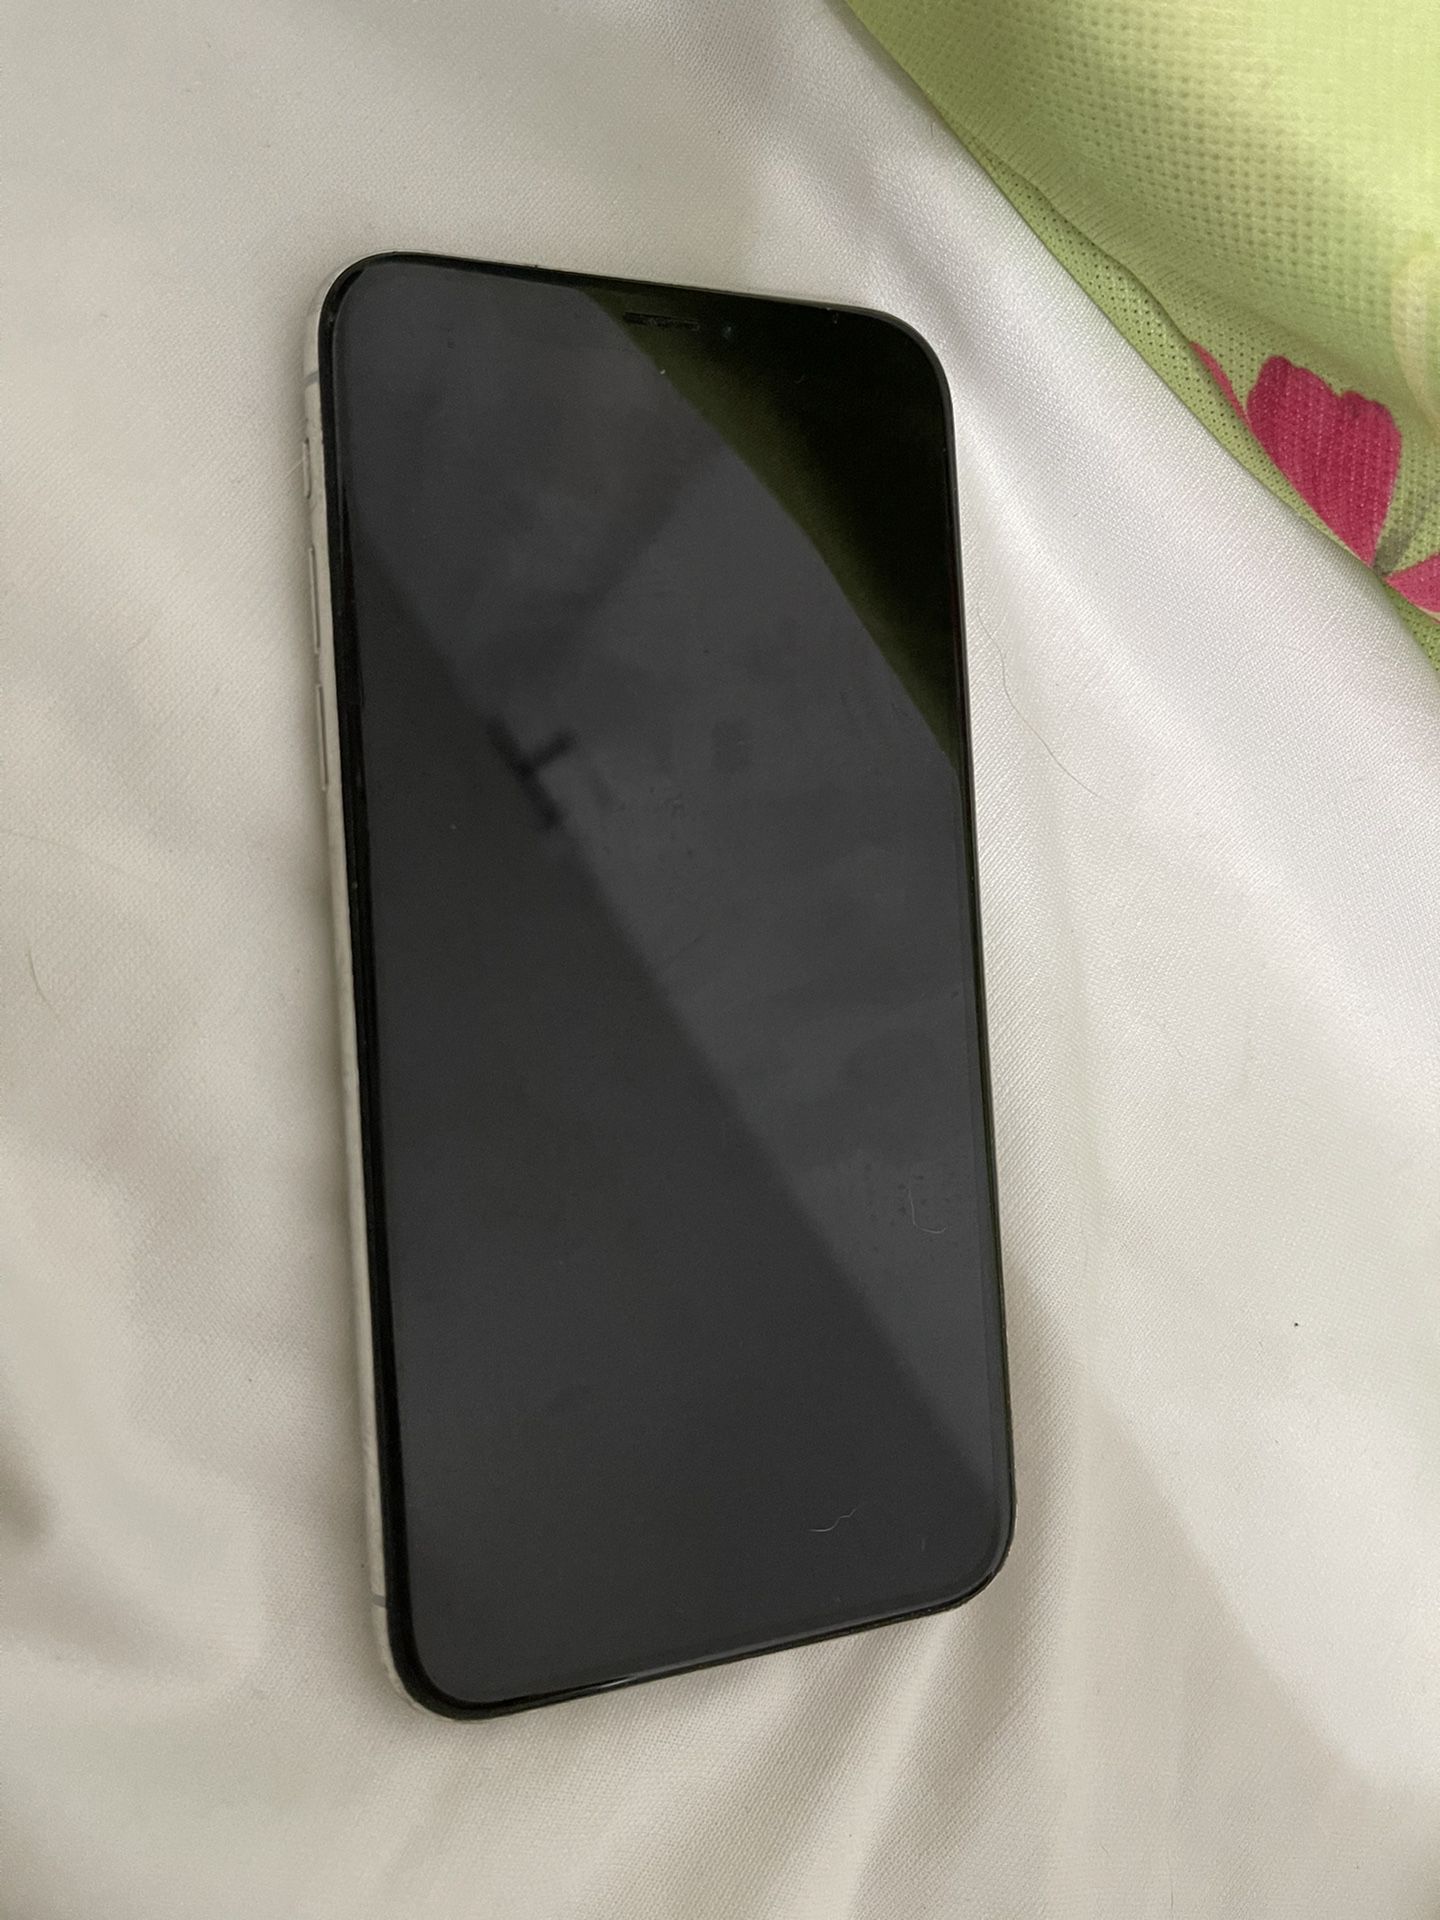 Iphone X 256 Gb White Unlocked